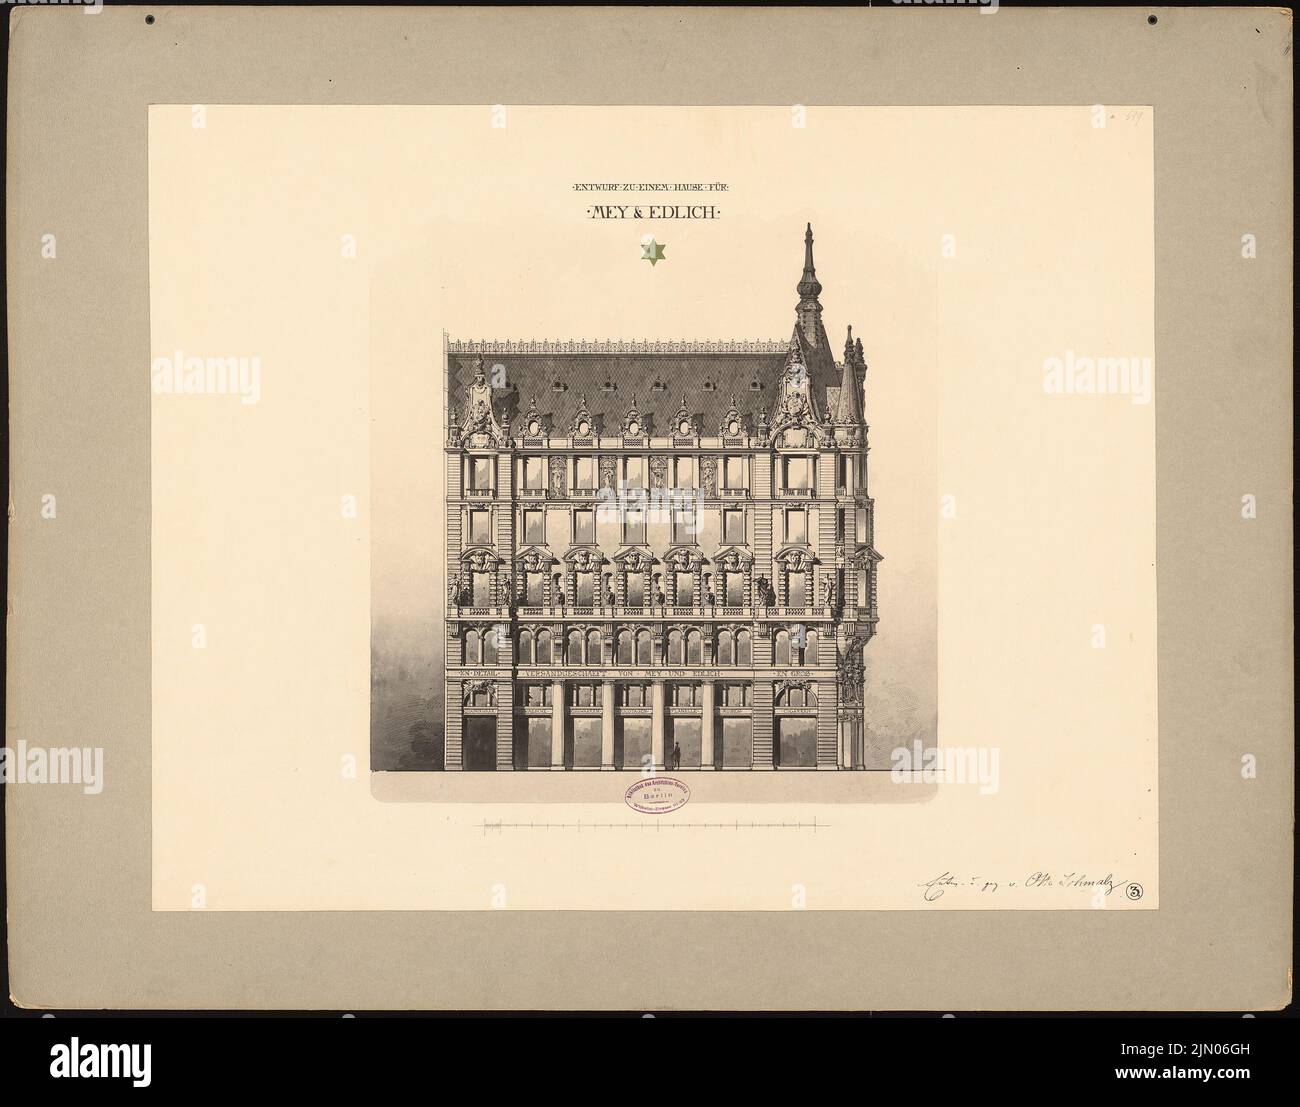 Schmalz otto 1861 1906 haus fur mey und edlich hi-res stock photography and  images - Alamy